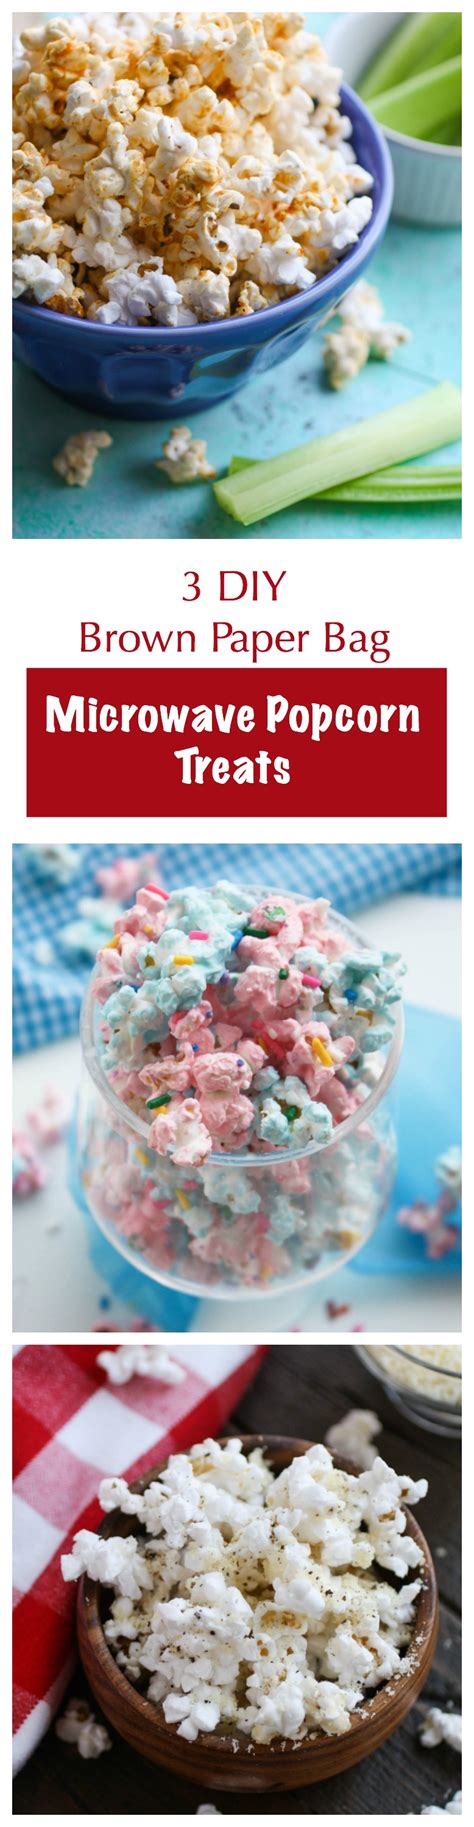 3 Diy Brown Paper Bag Microwave Popcorn Treats